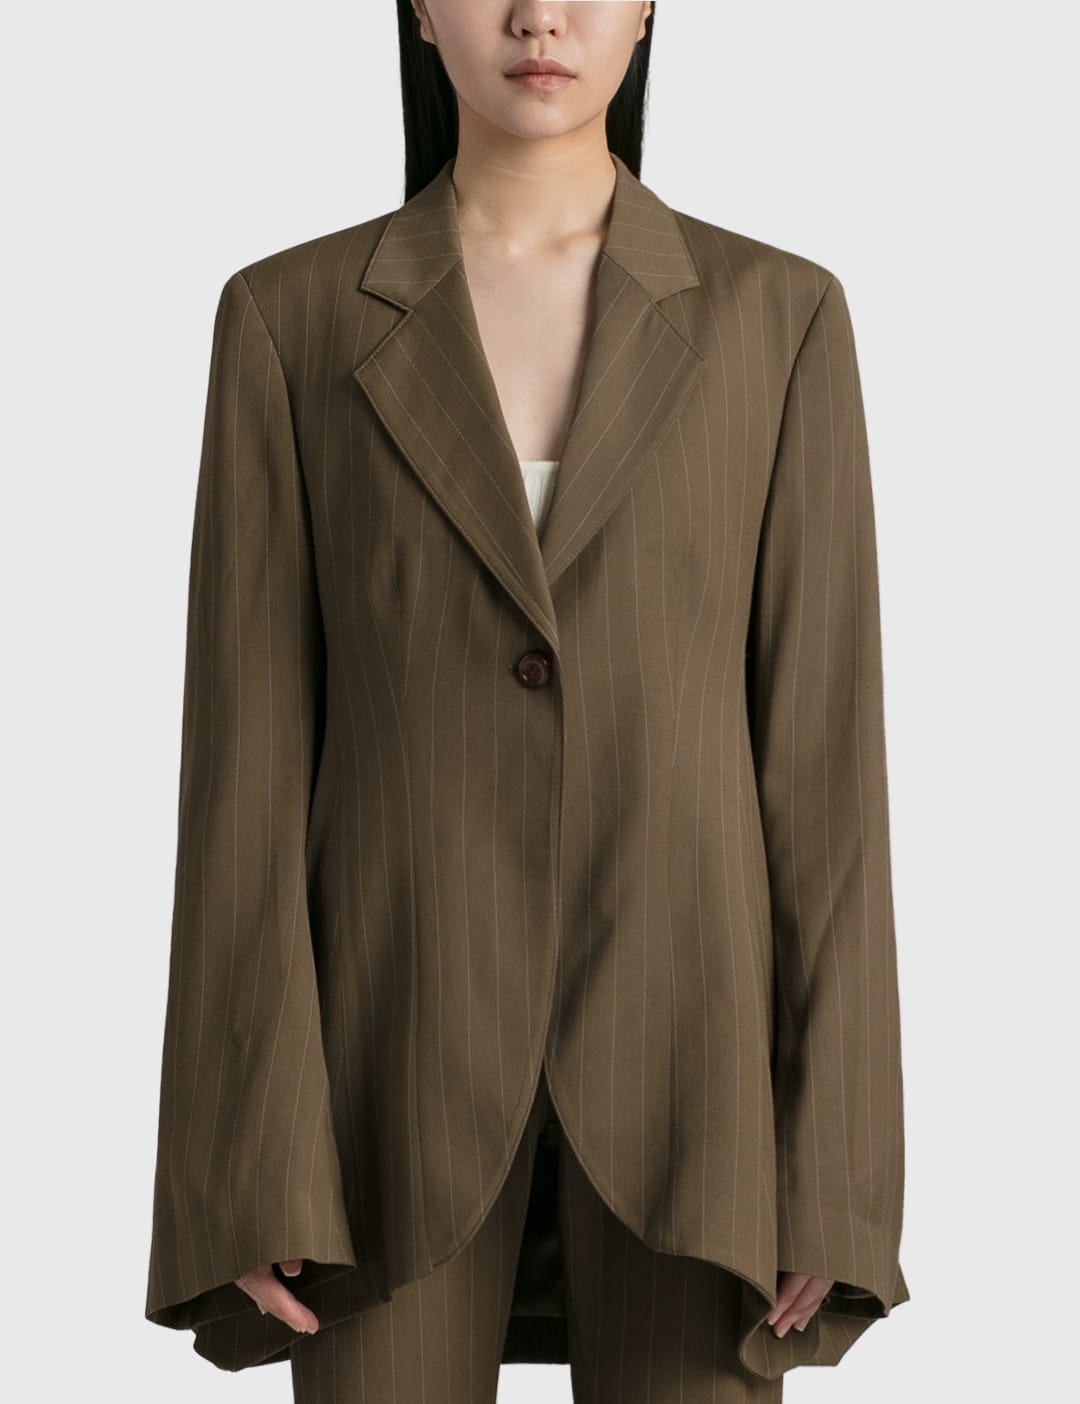 Acne Studios Single-Breasted Suit Jacket